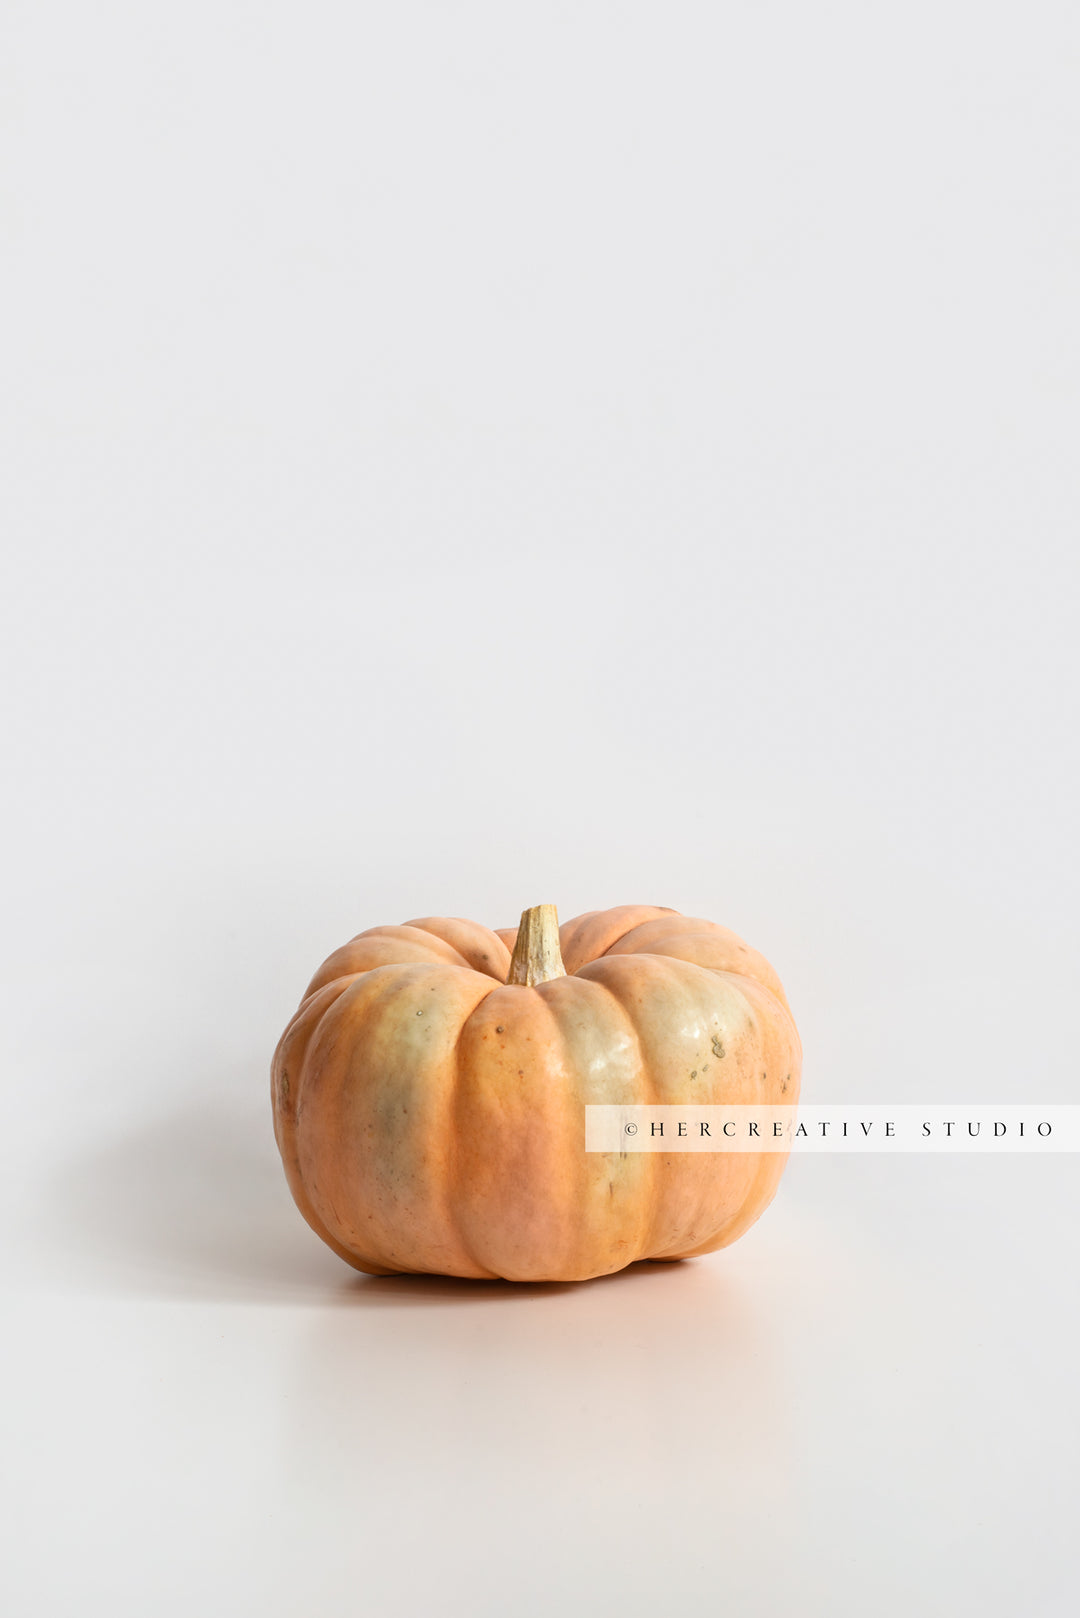 Orange Pumpkin on White Background. Digital Stock Image.